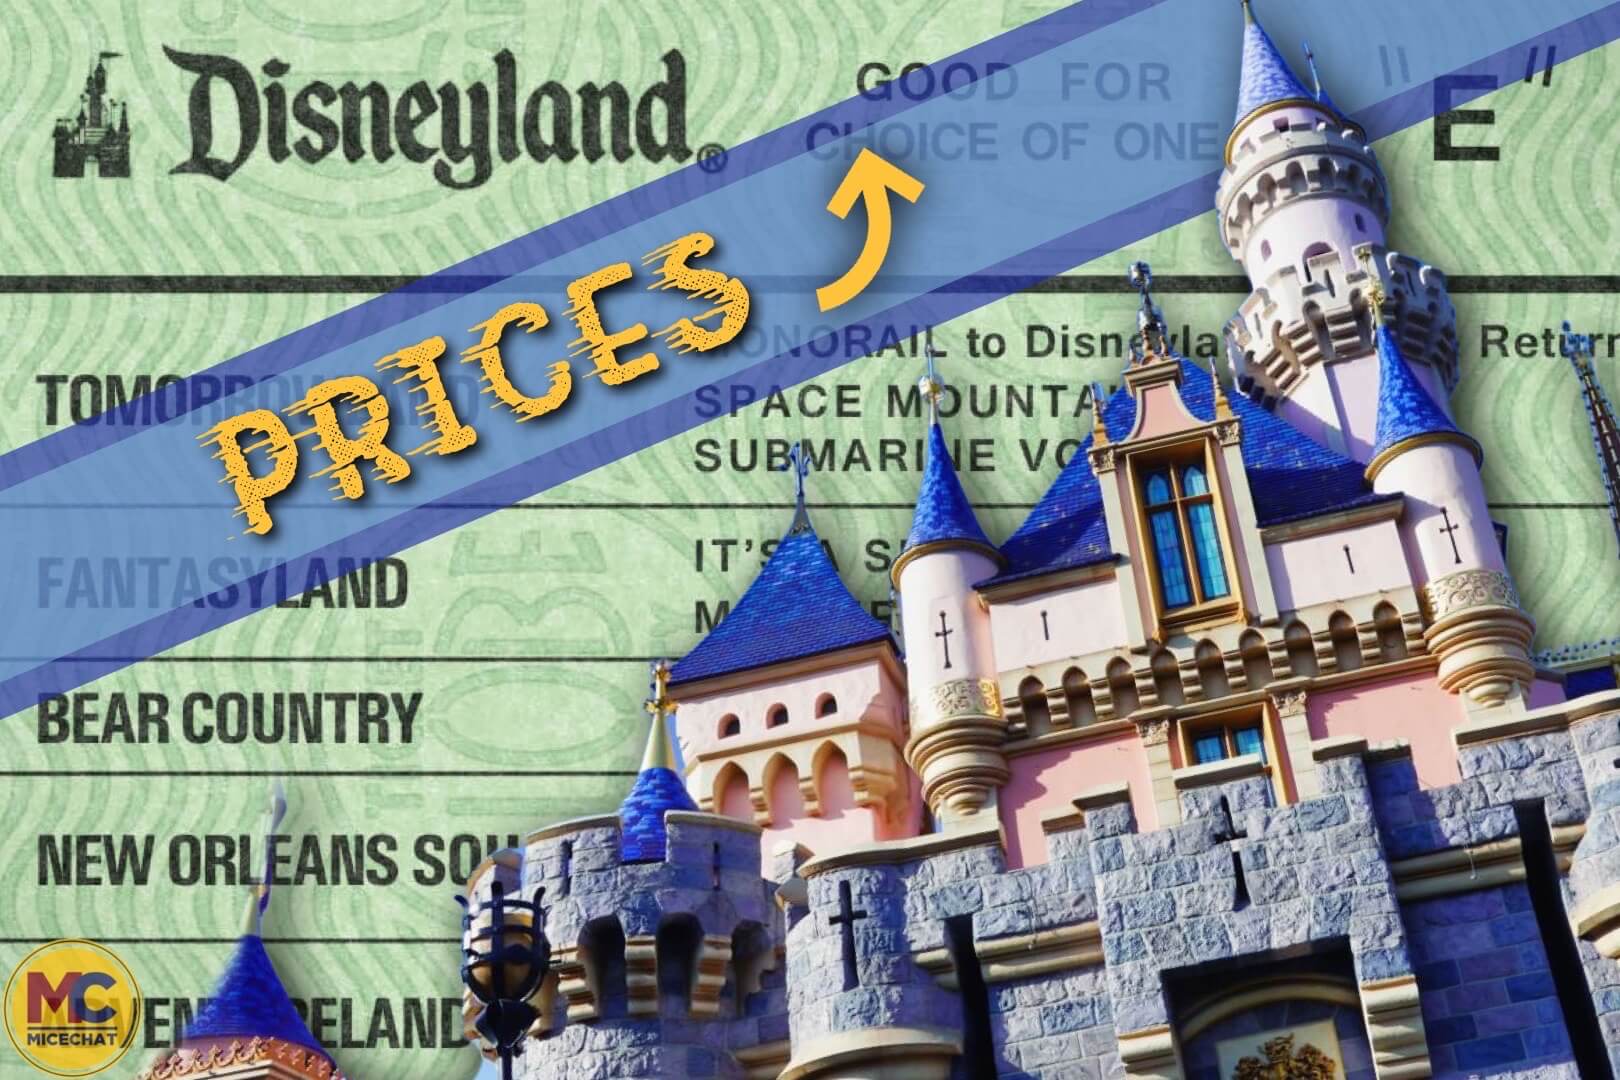 Going Up Disneyland Ticket Price Increase Today!